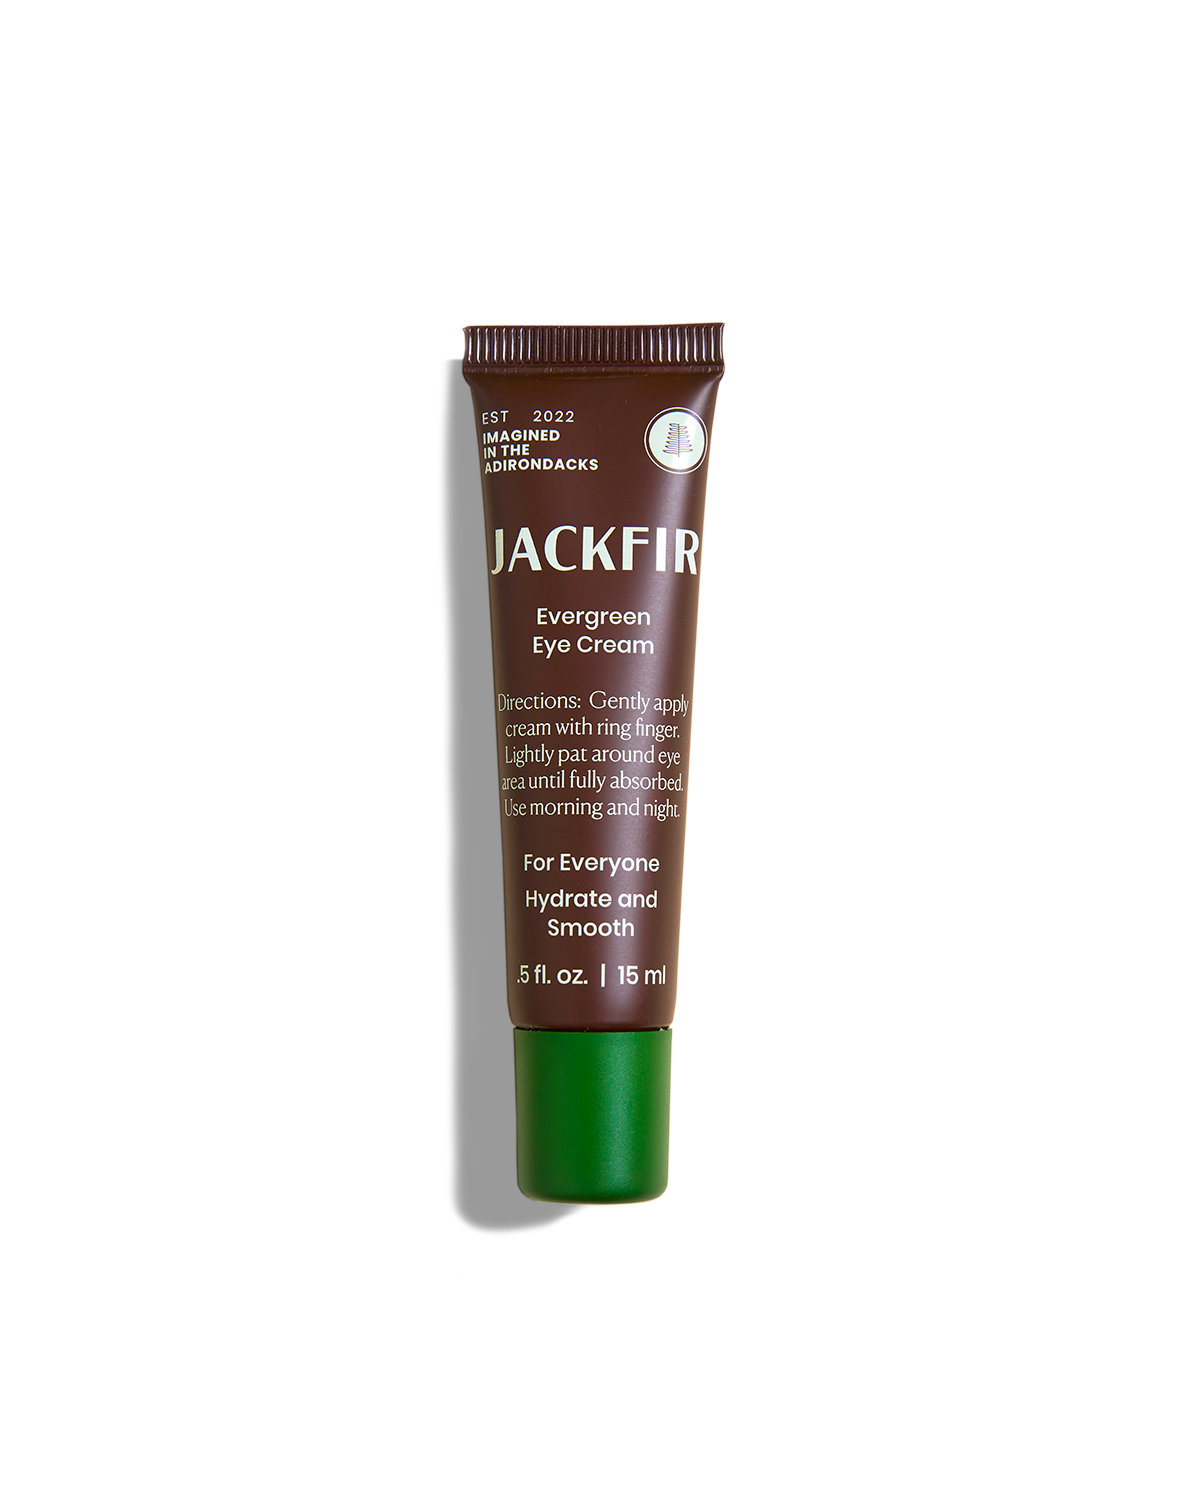 JACKFIR Evergreen Eye Cream